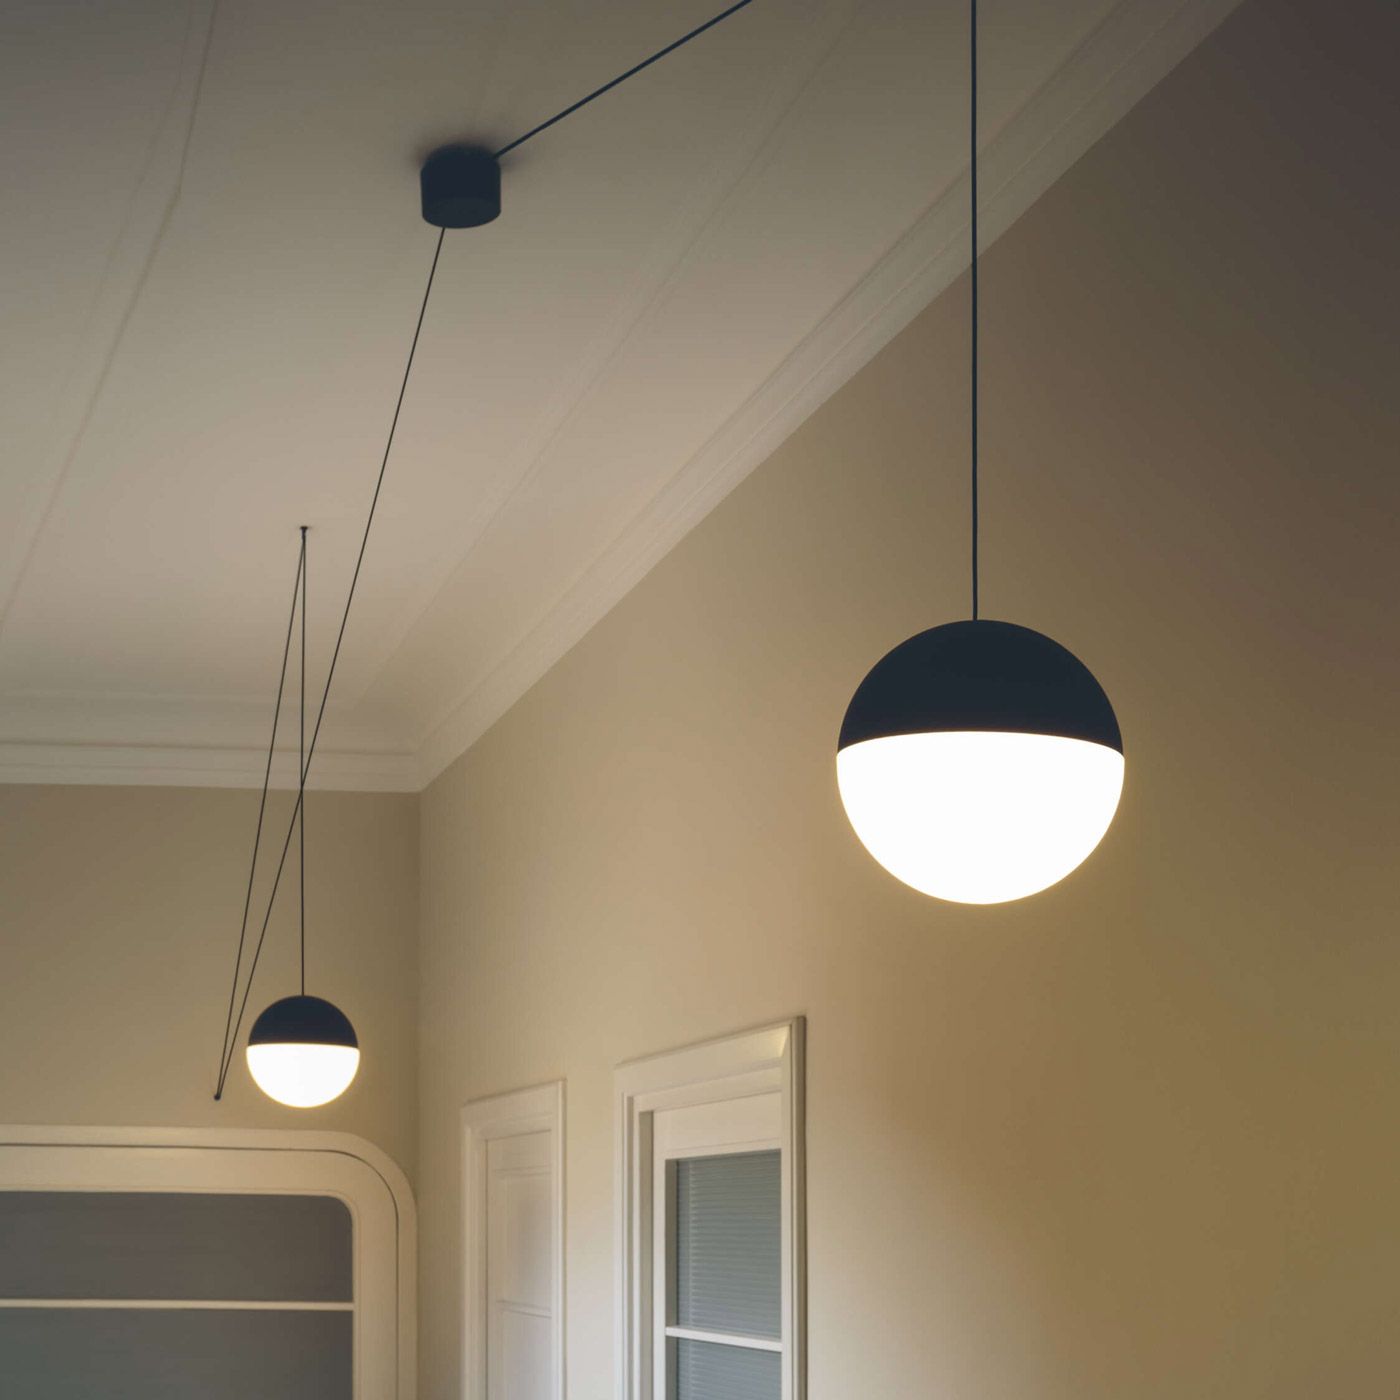 Flos String Light Ball Head Pendant Lamp 22m Zwart met sensordimmer op kabel